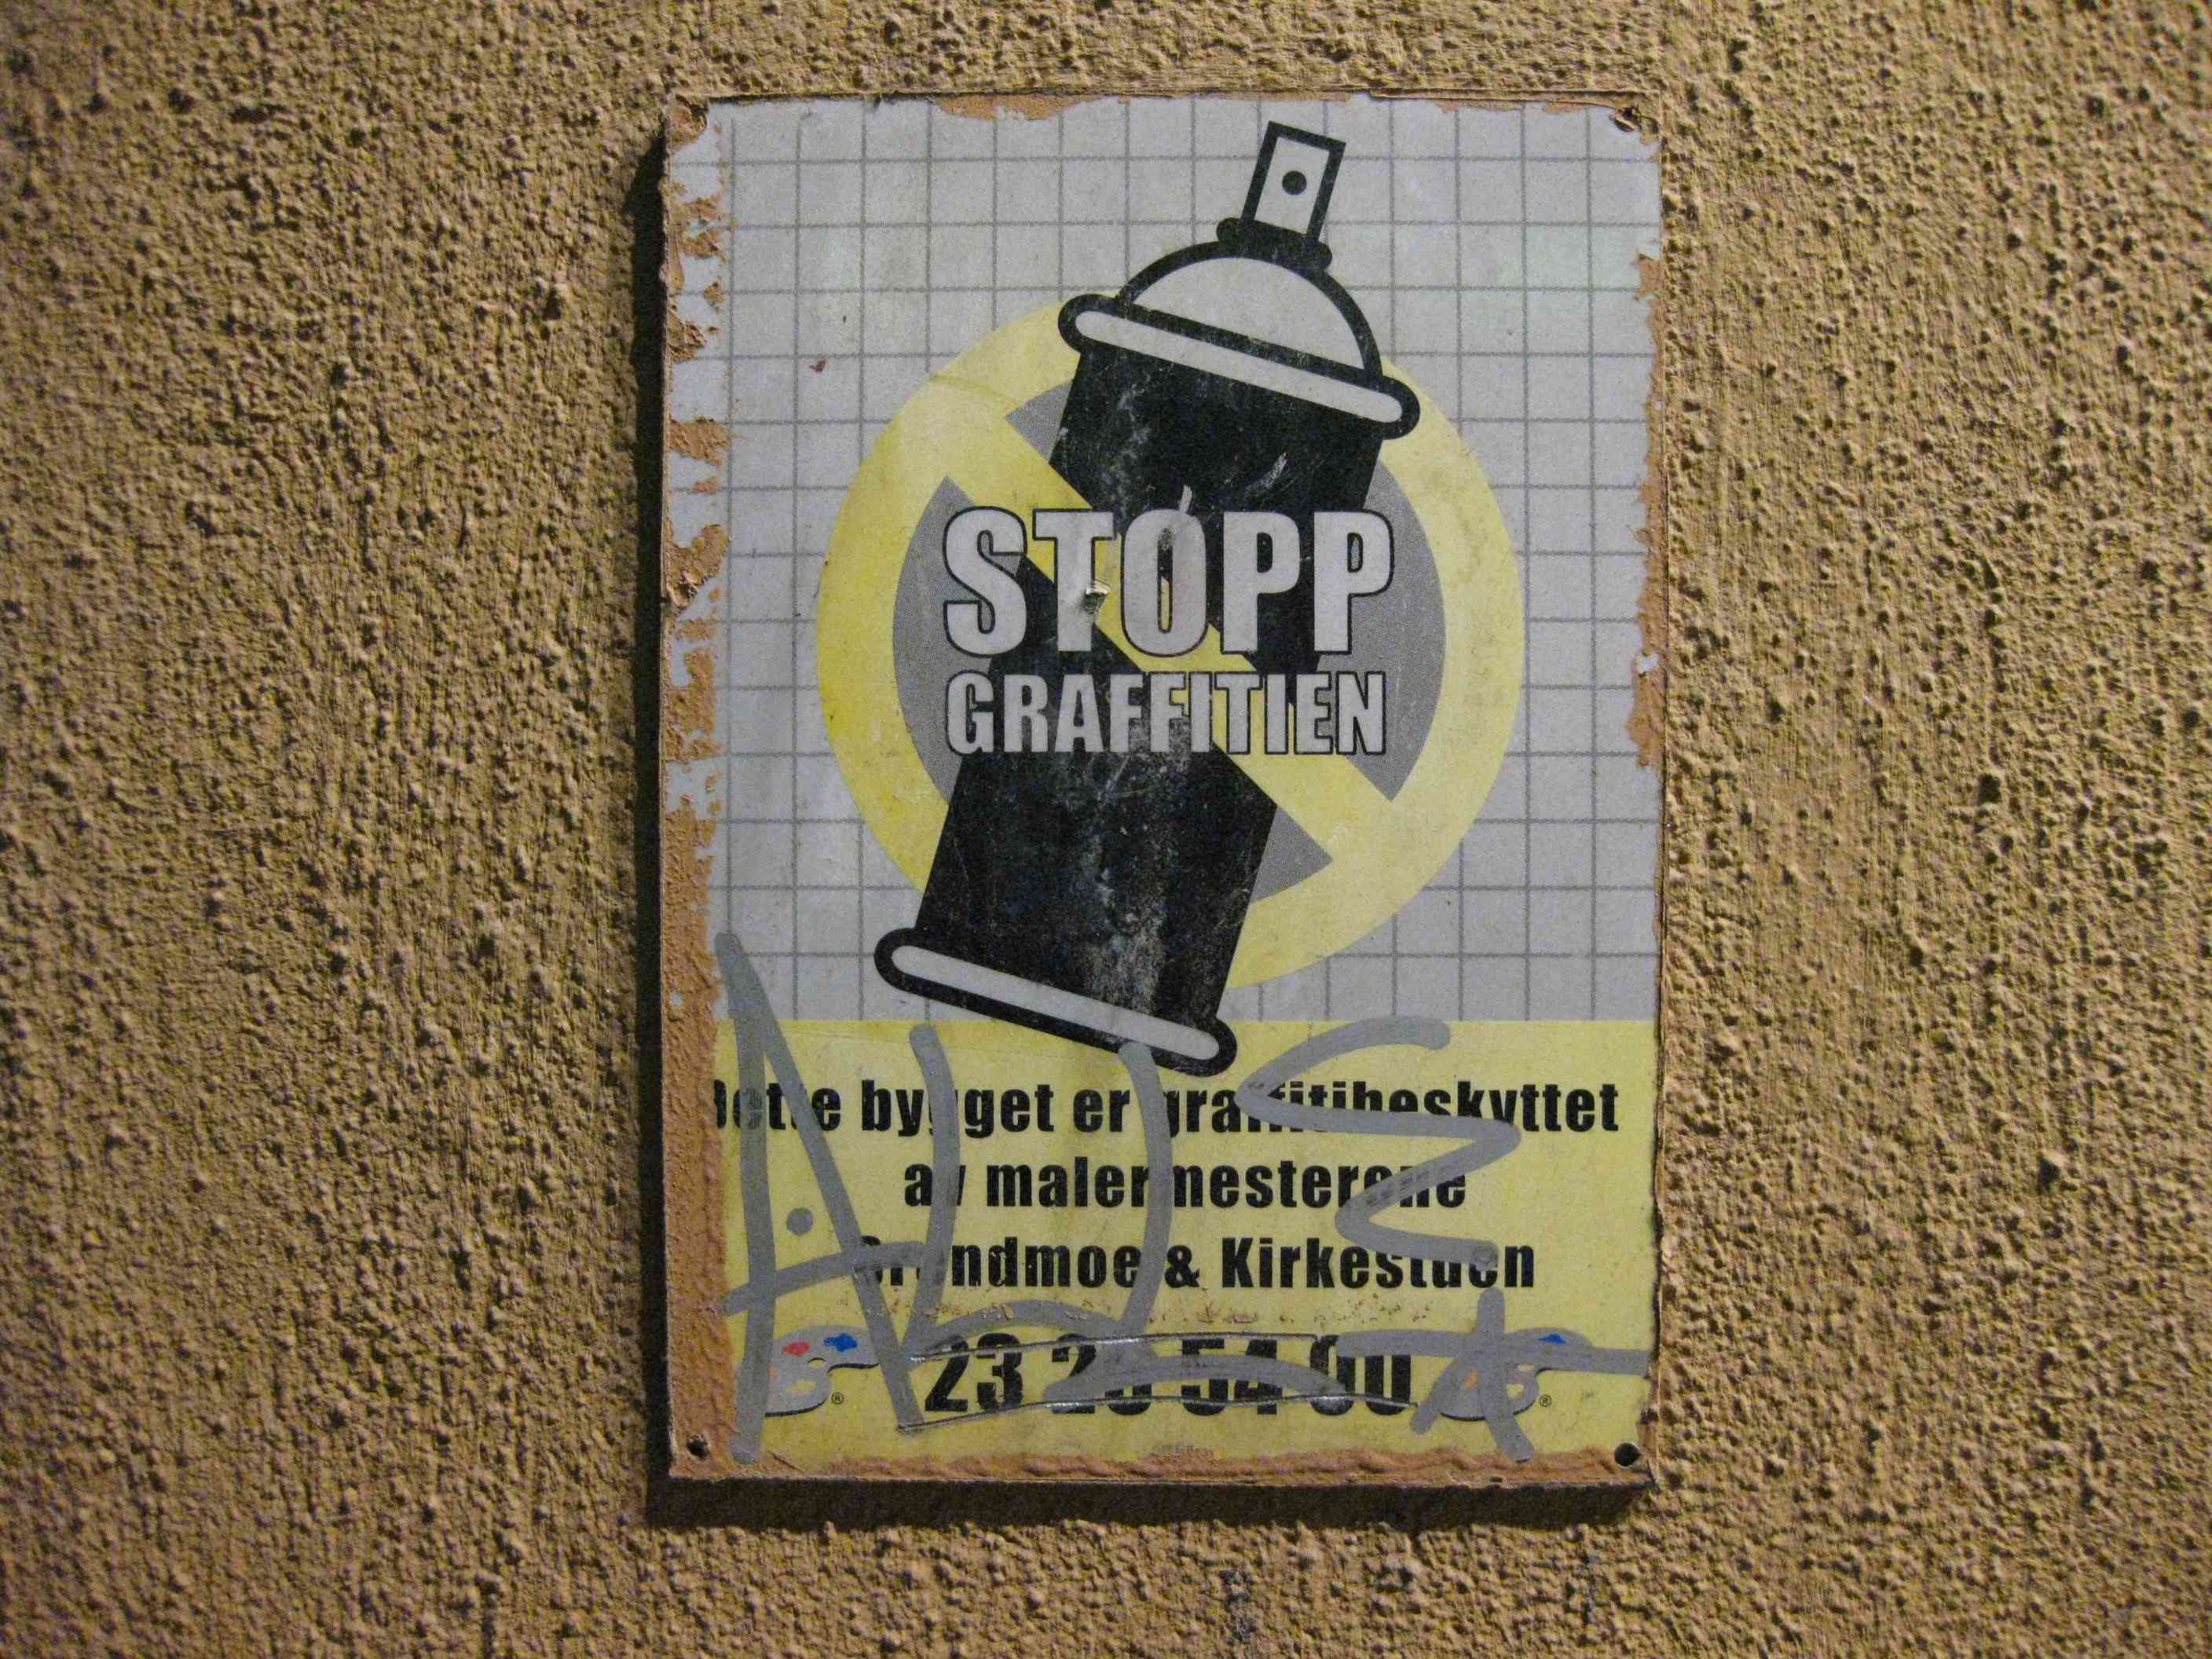 Fight against graffiti in Oslo, Norway